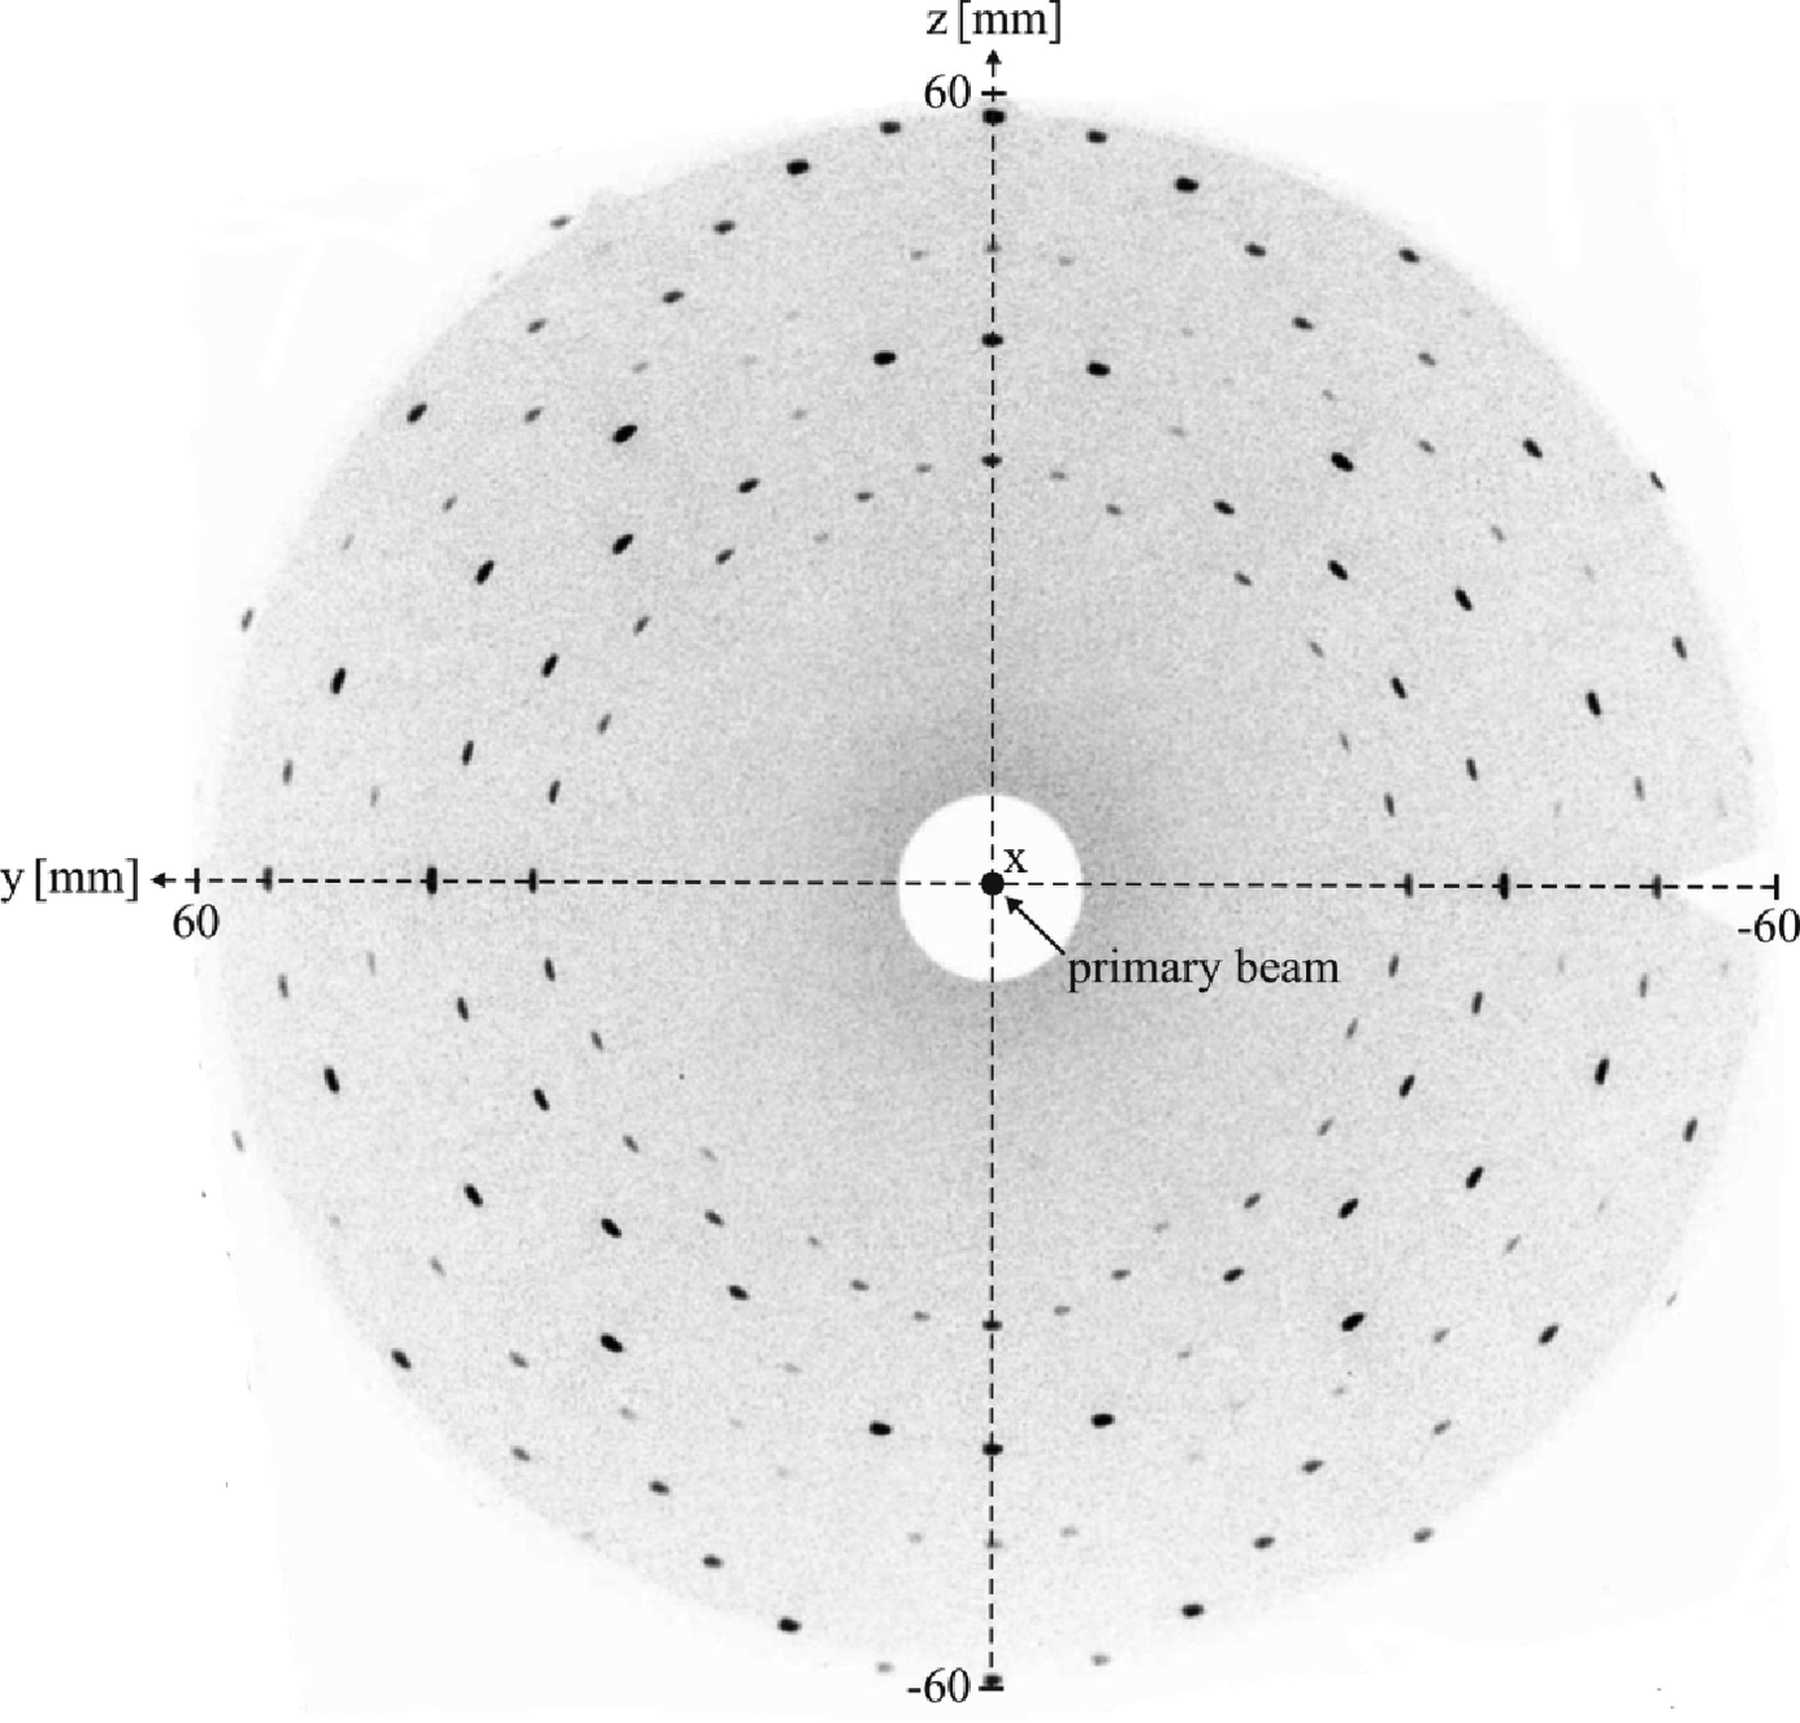 laue diffraction pattern